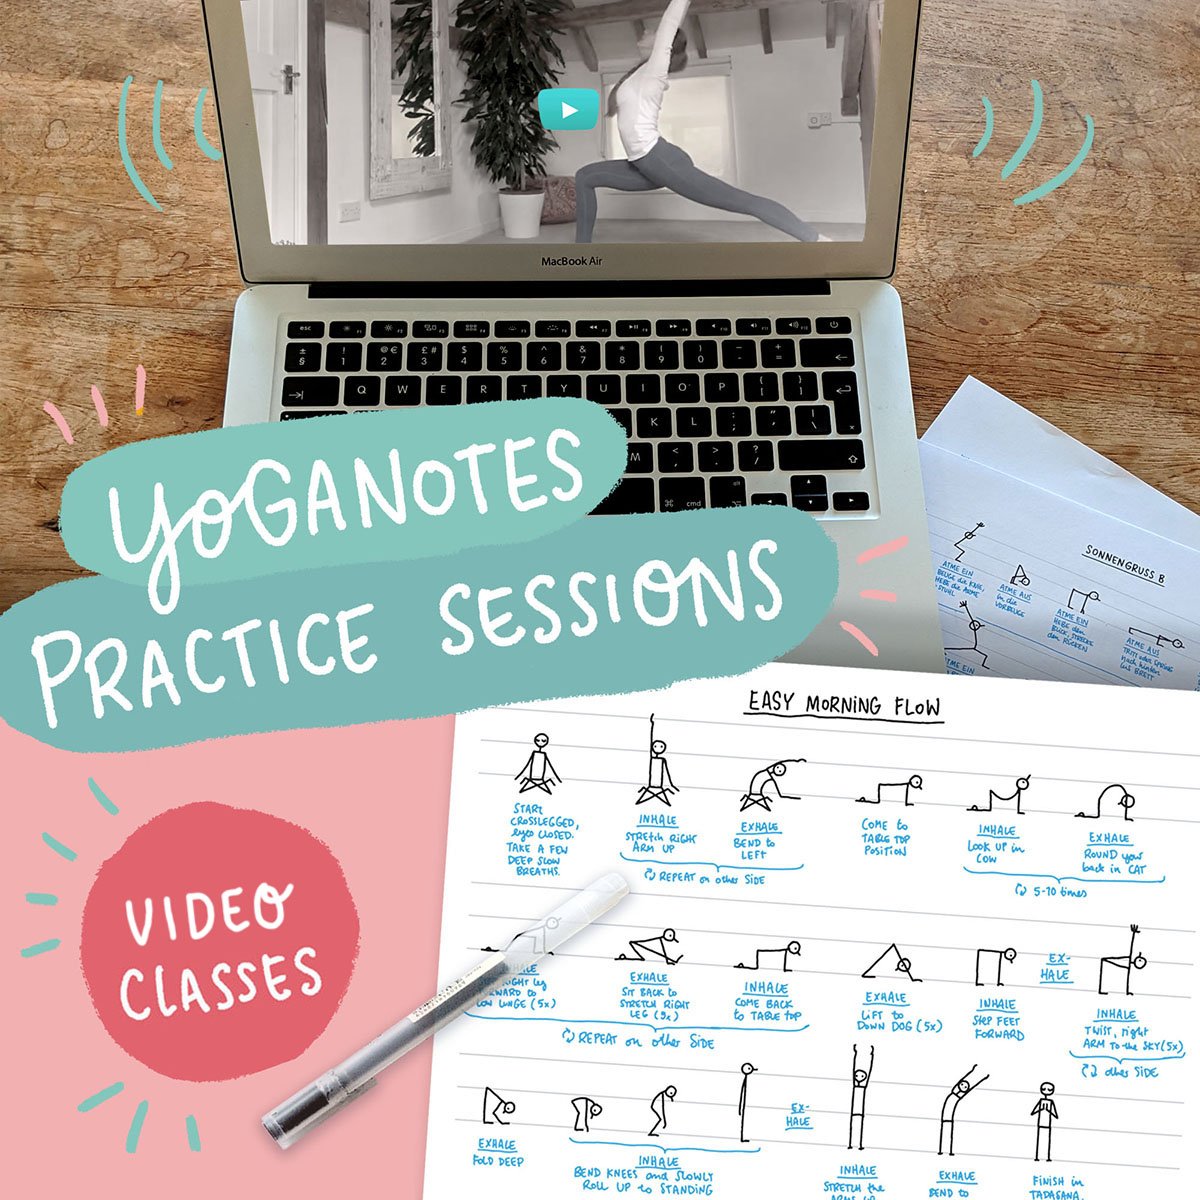 Yoganotes Practice Sessions – Video classes (English) - Eva-Lotta's Shop